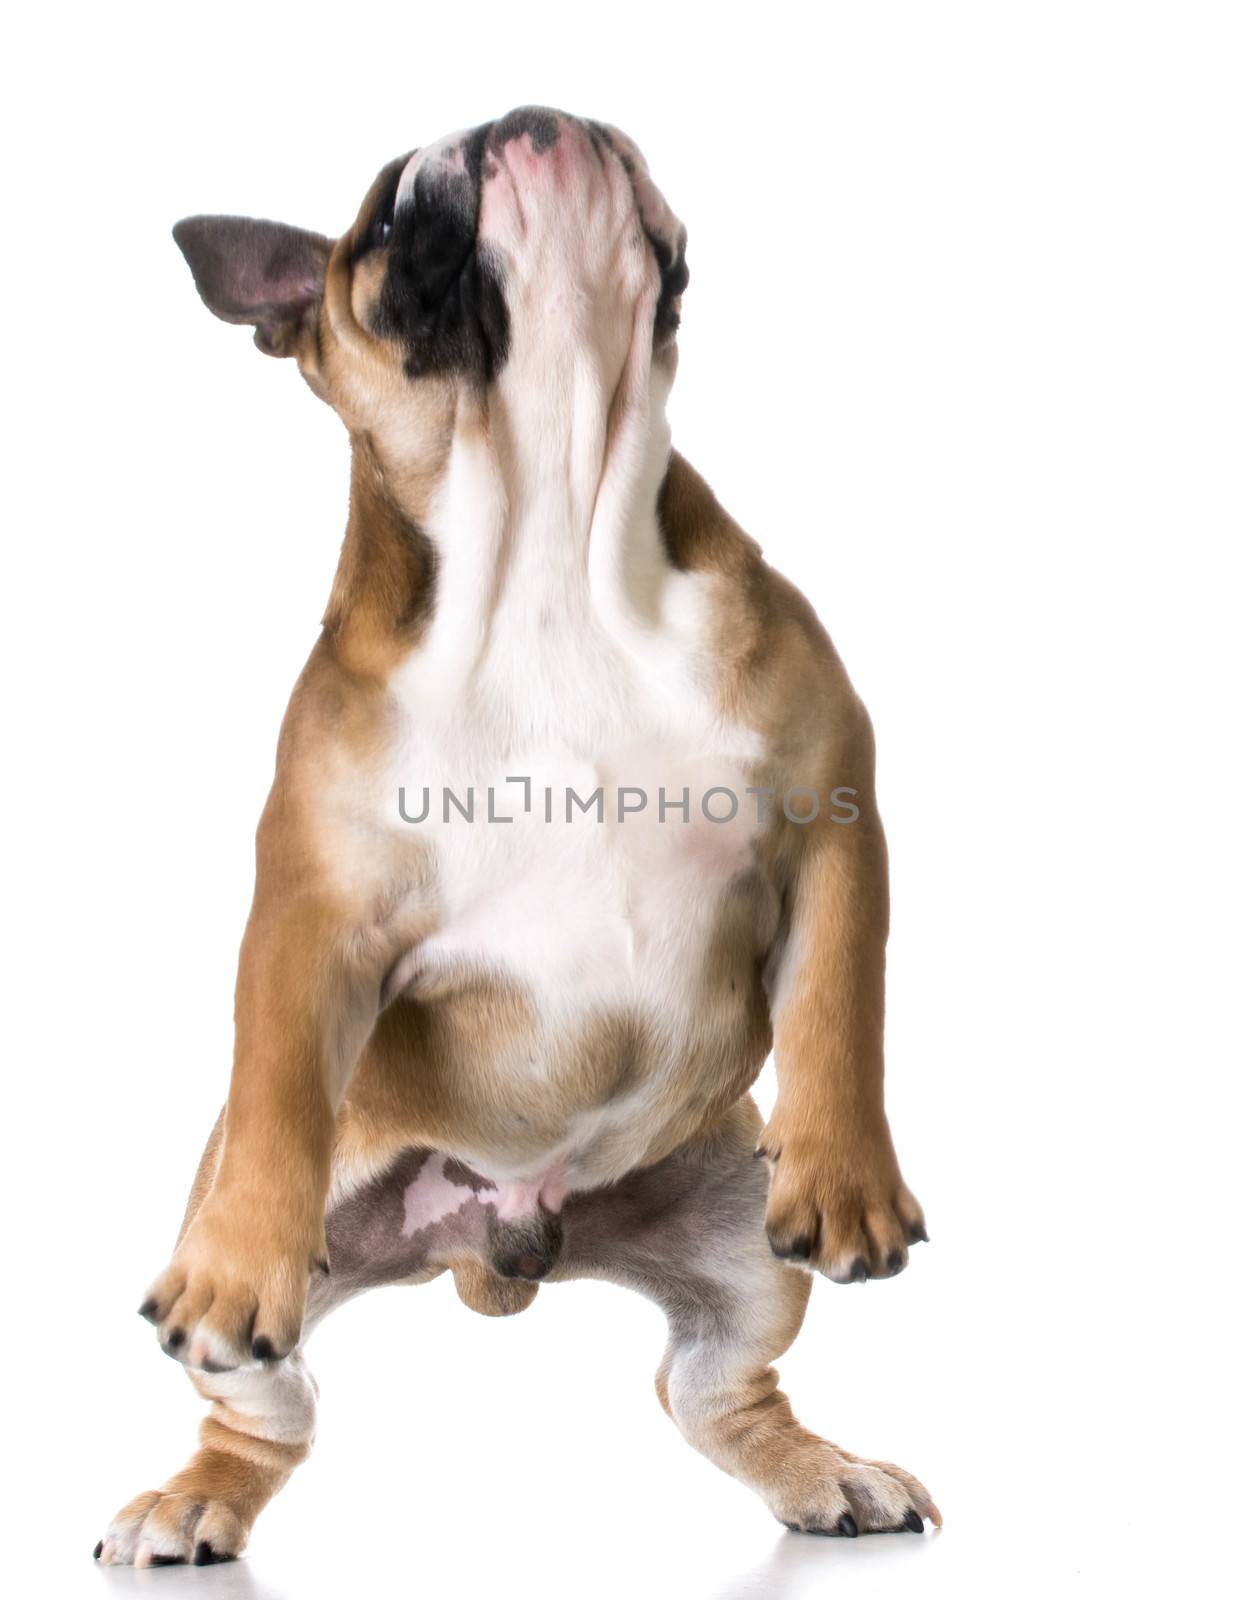 bulldog jumping up on back legs on white background